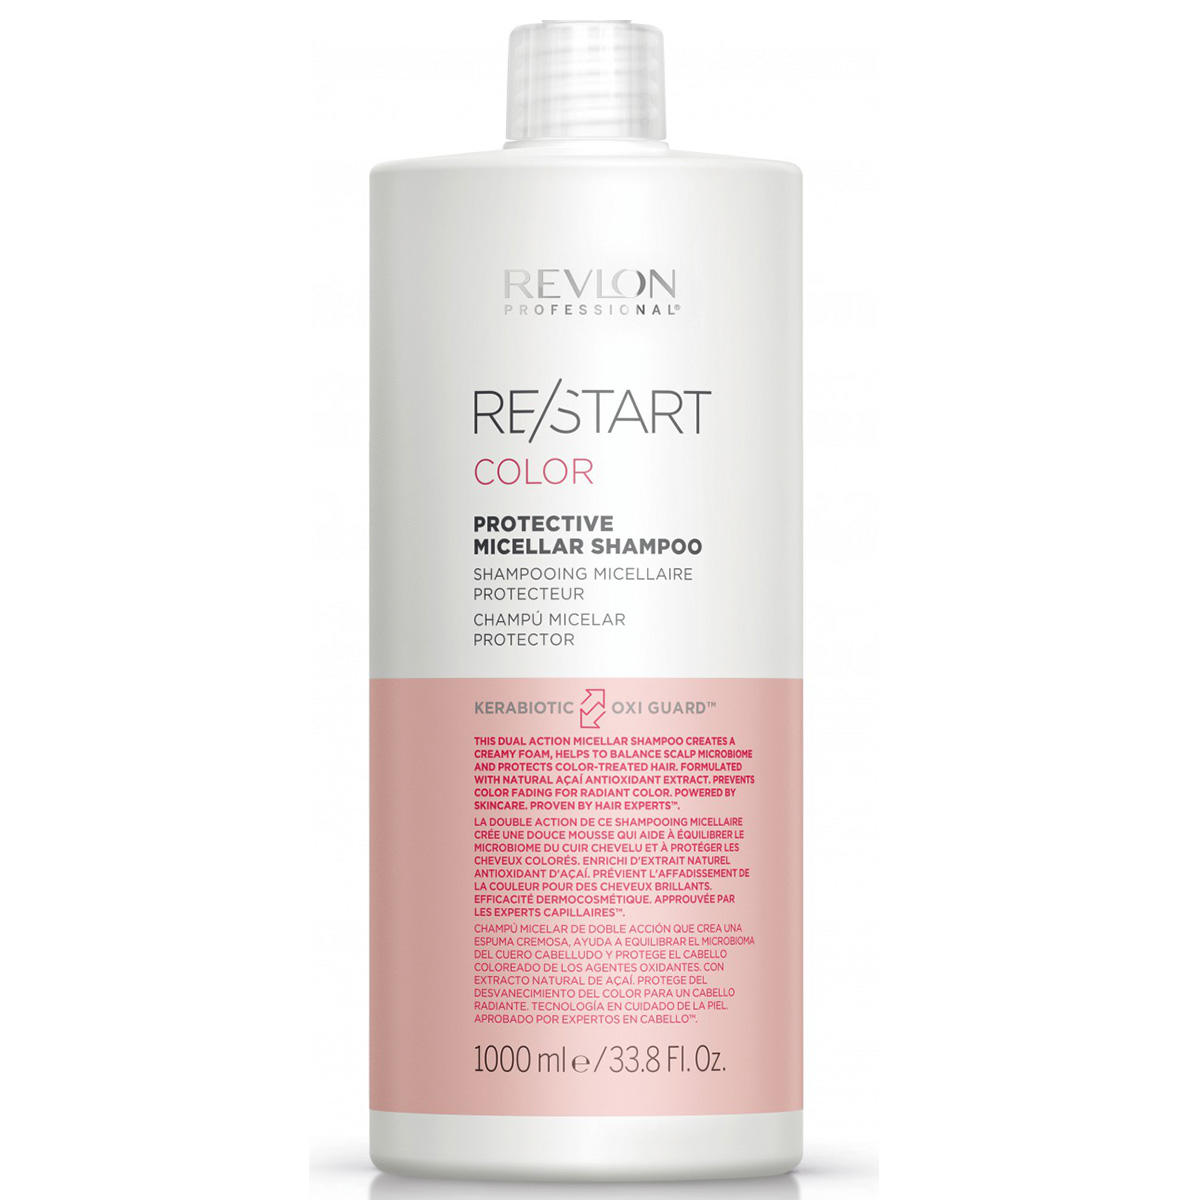 Shampoo Color Professional Micellar Revlon RE/START 1 Liter | baslerbeauty Protective